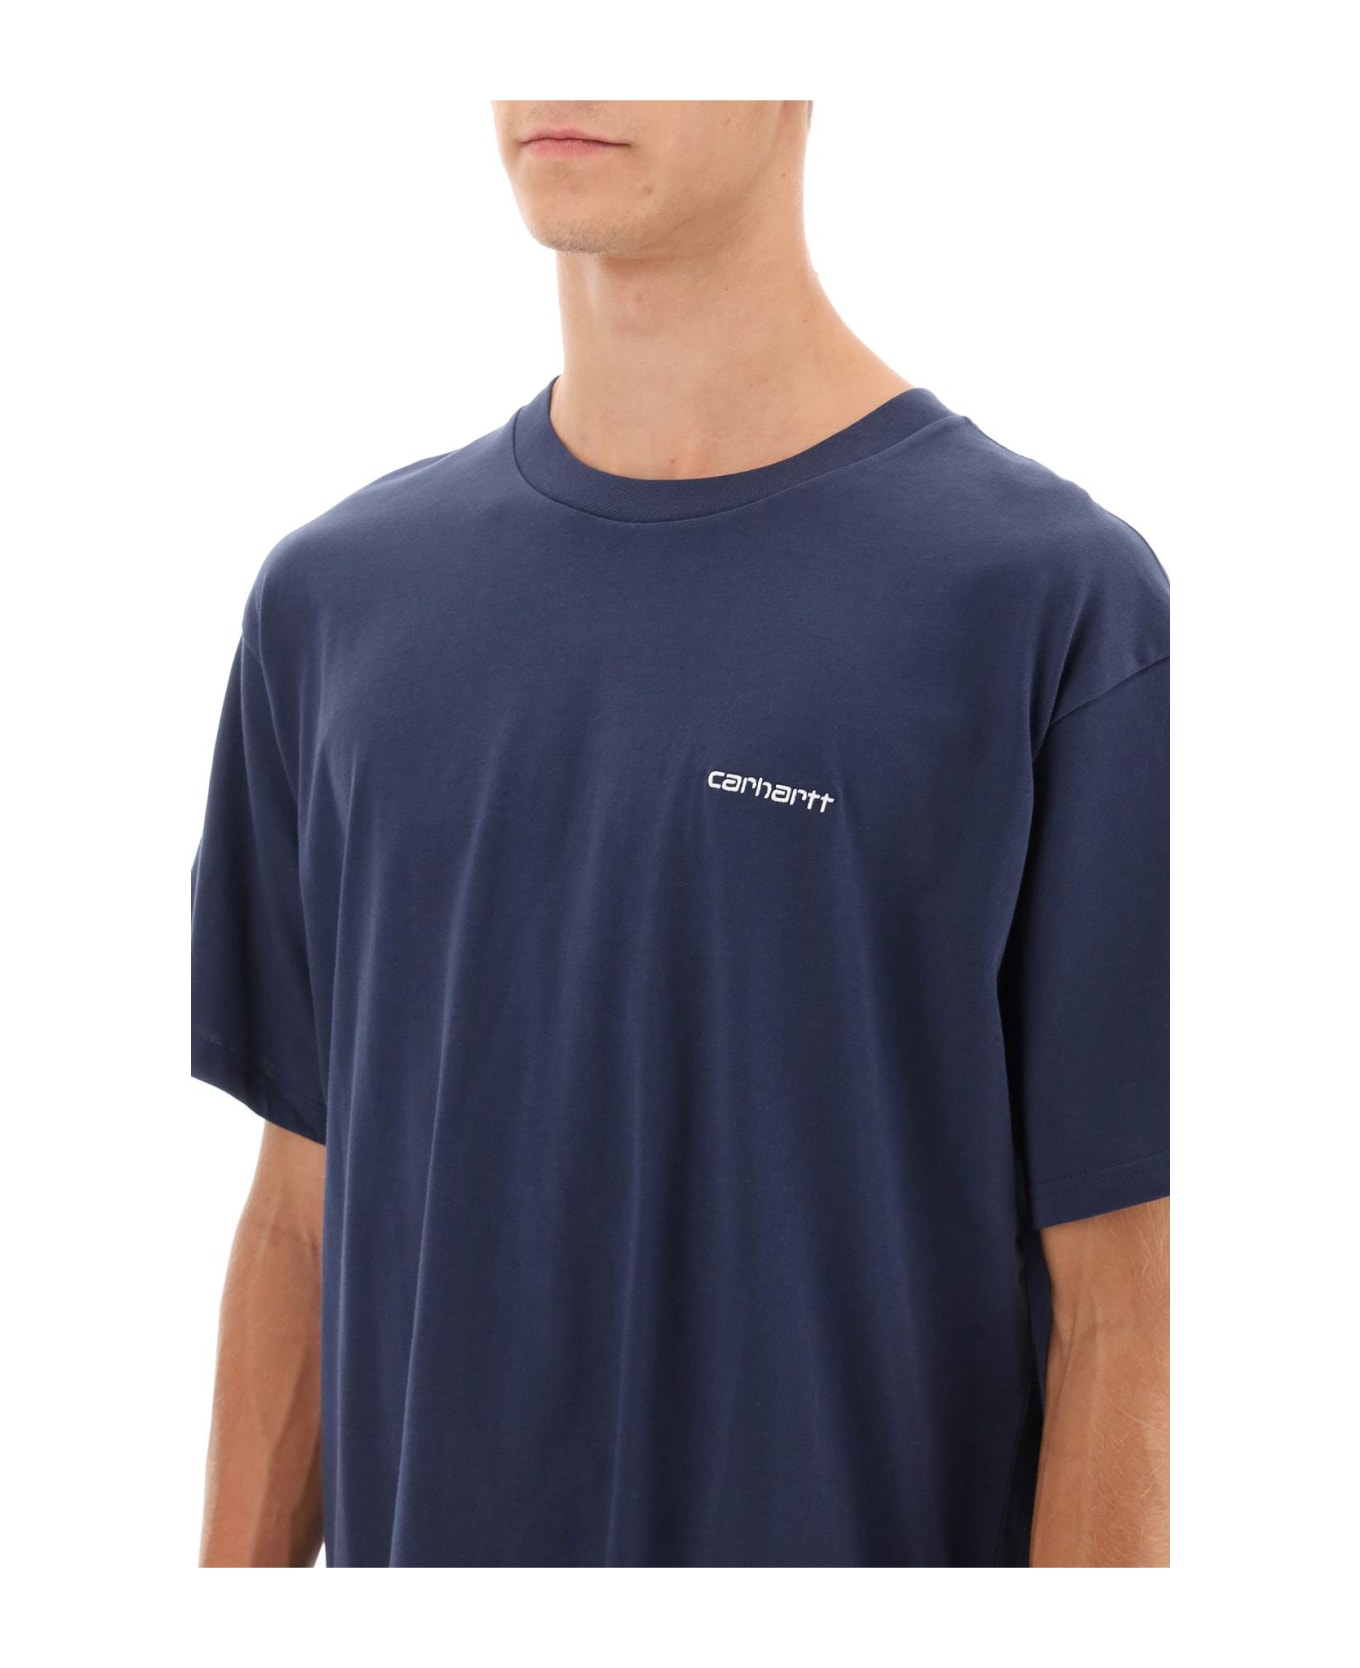 Carhartt Logo Embroidery T-shirt - BLUE WHITE (Blue)